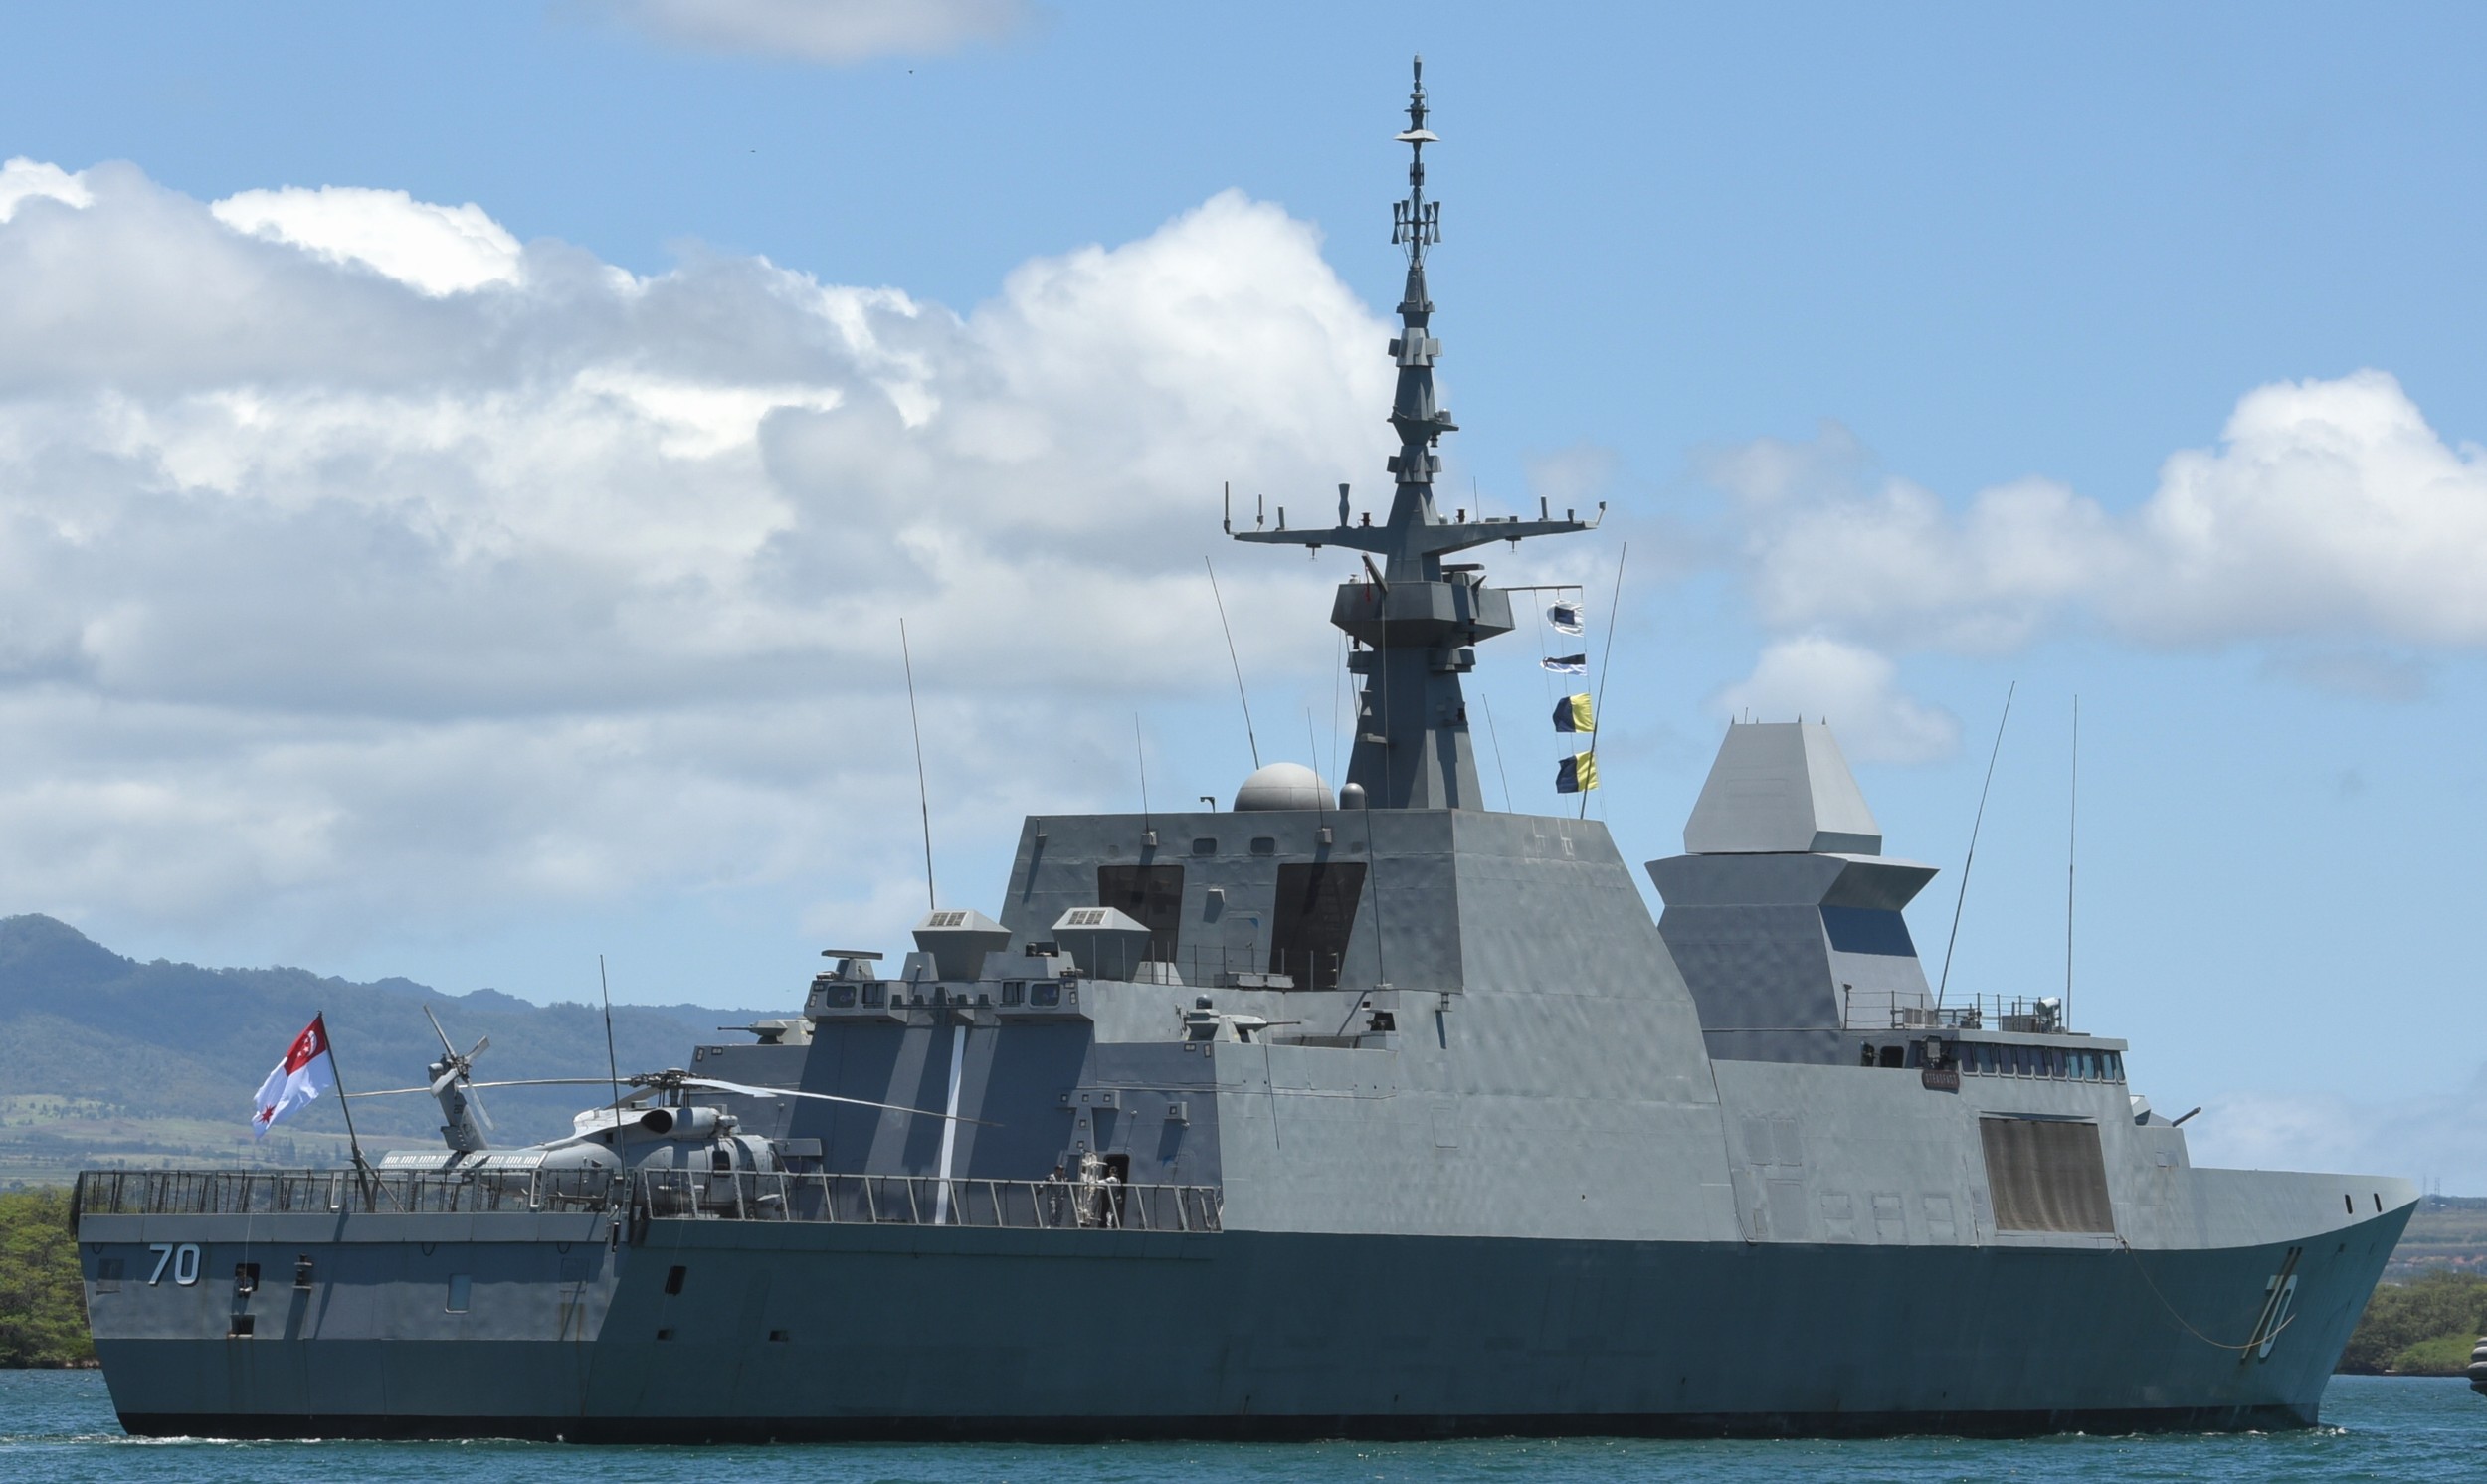 70 rss steadfast formidable class multi-mission missile frigate ffg republic singapore navy rimpac hawaii 17